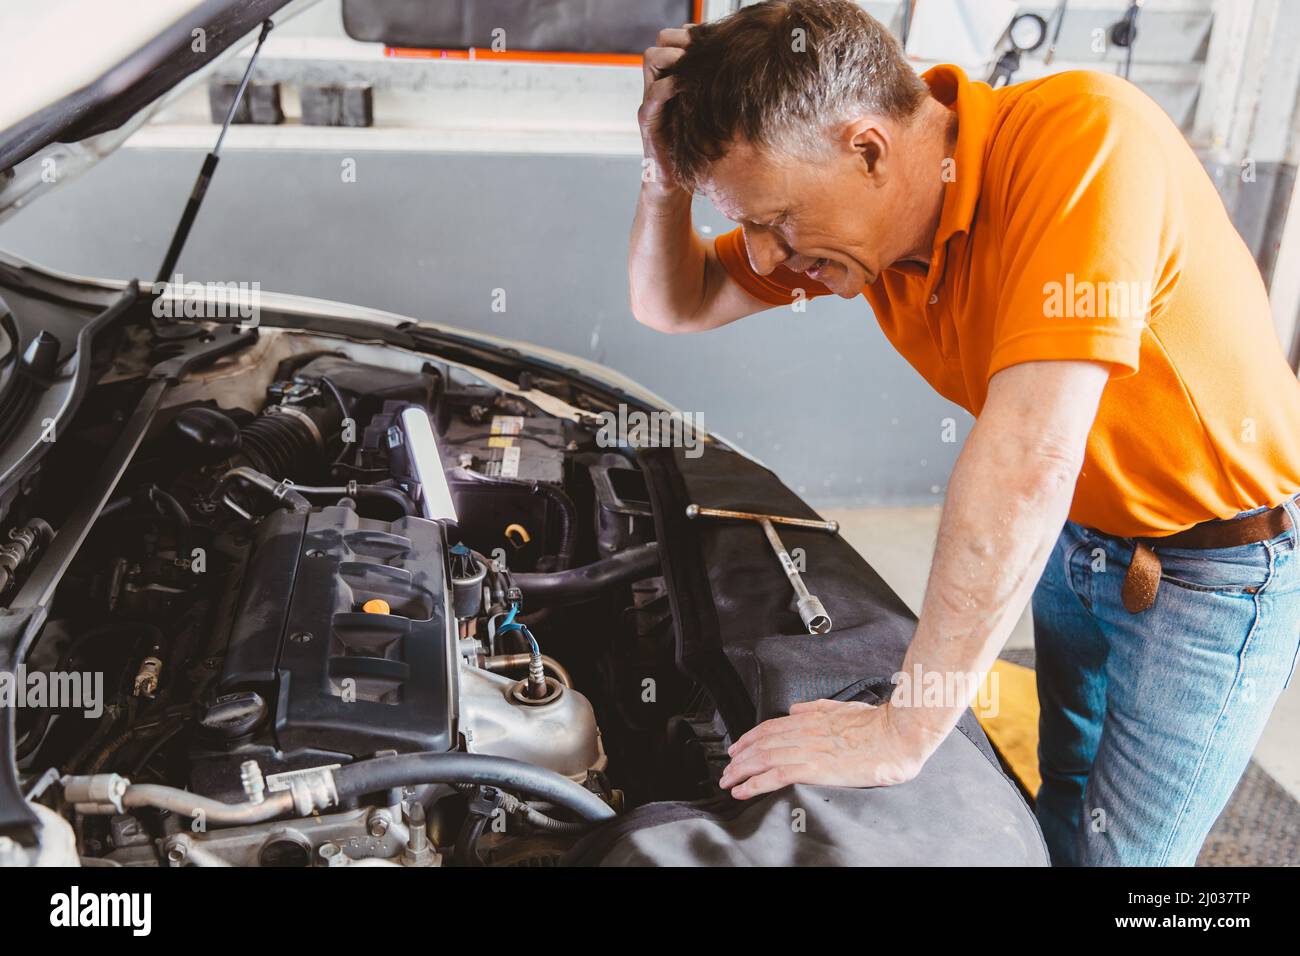 garage mechanic worker stress with problem car engine fail Stock Photo